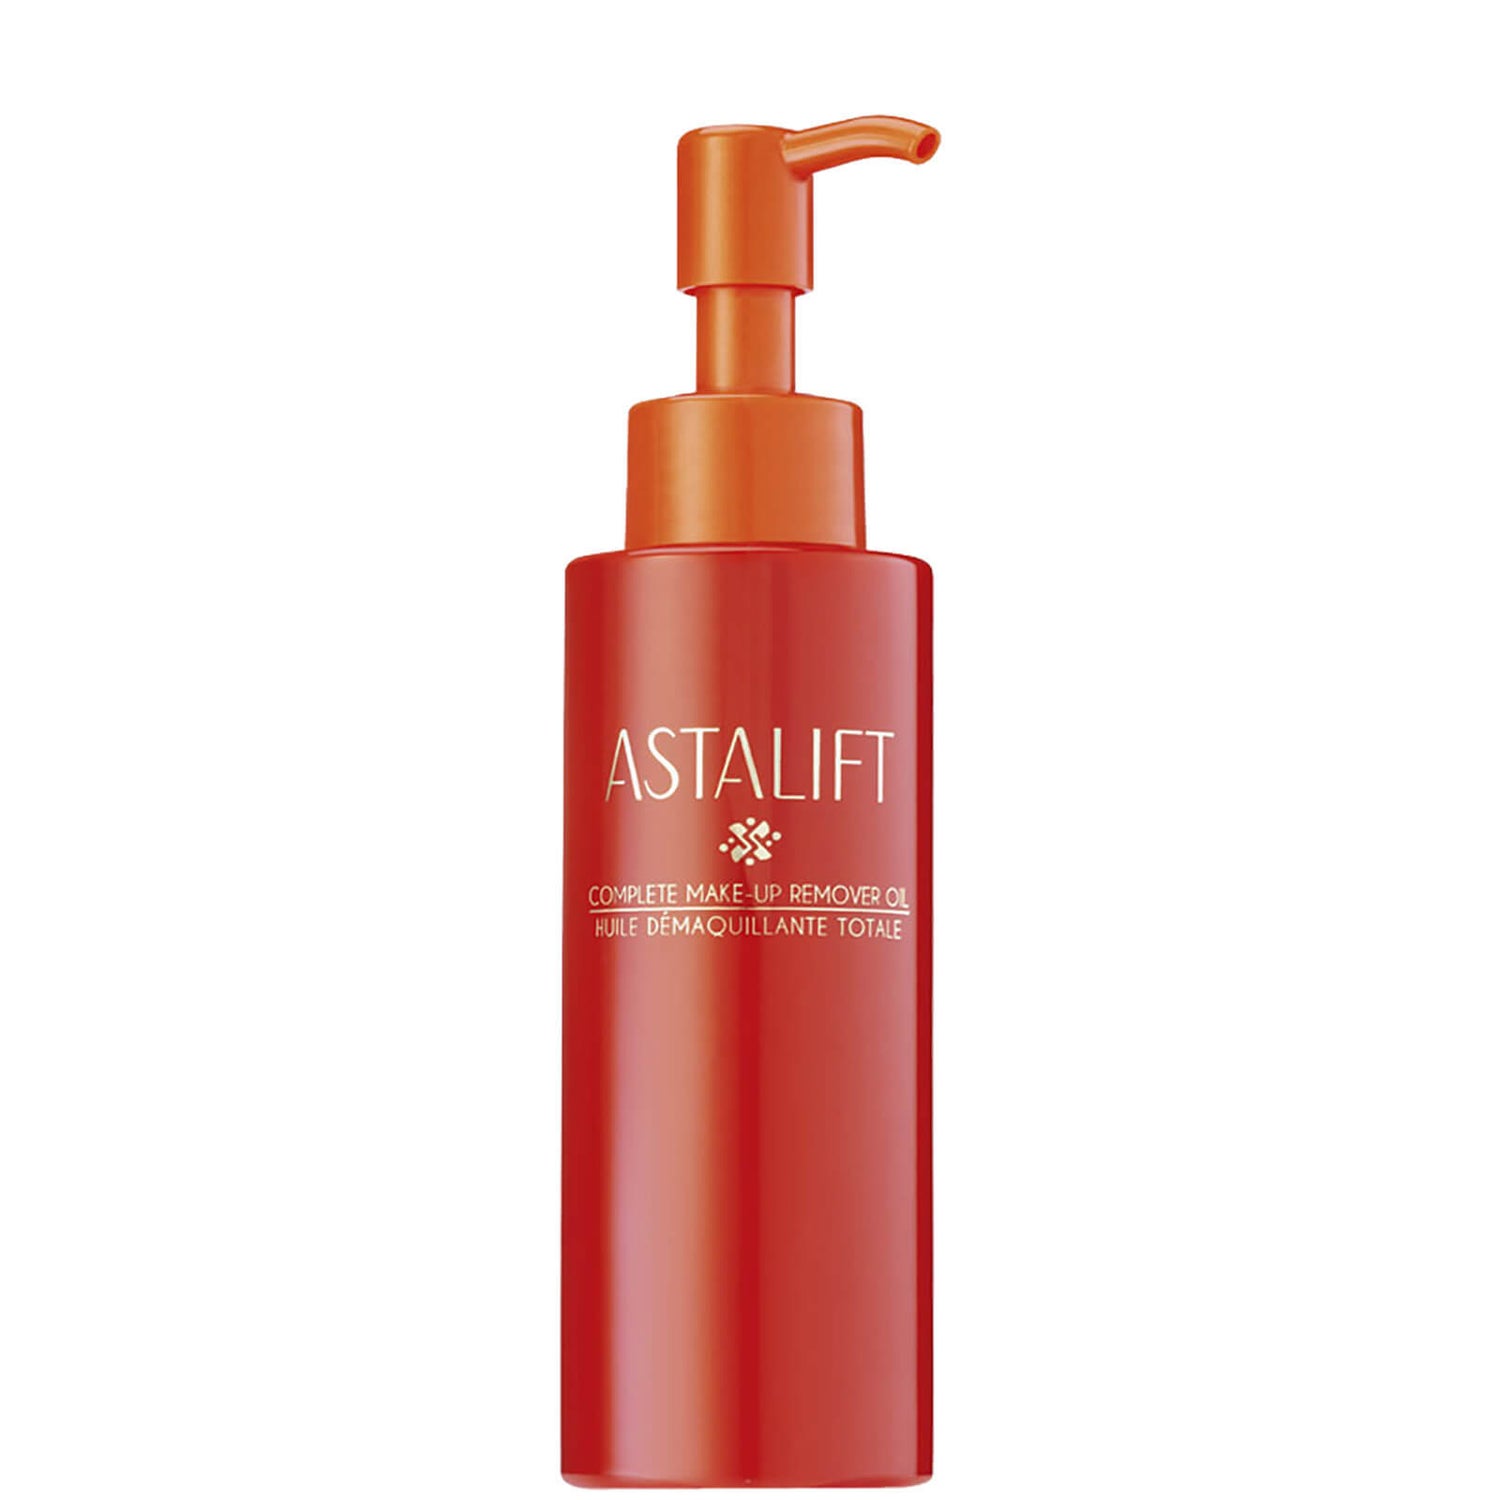 Astalift Complete Make-Up Remover Oil - 120ml